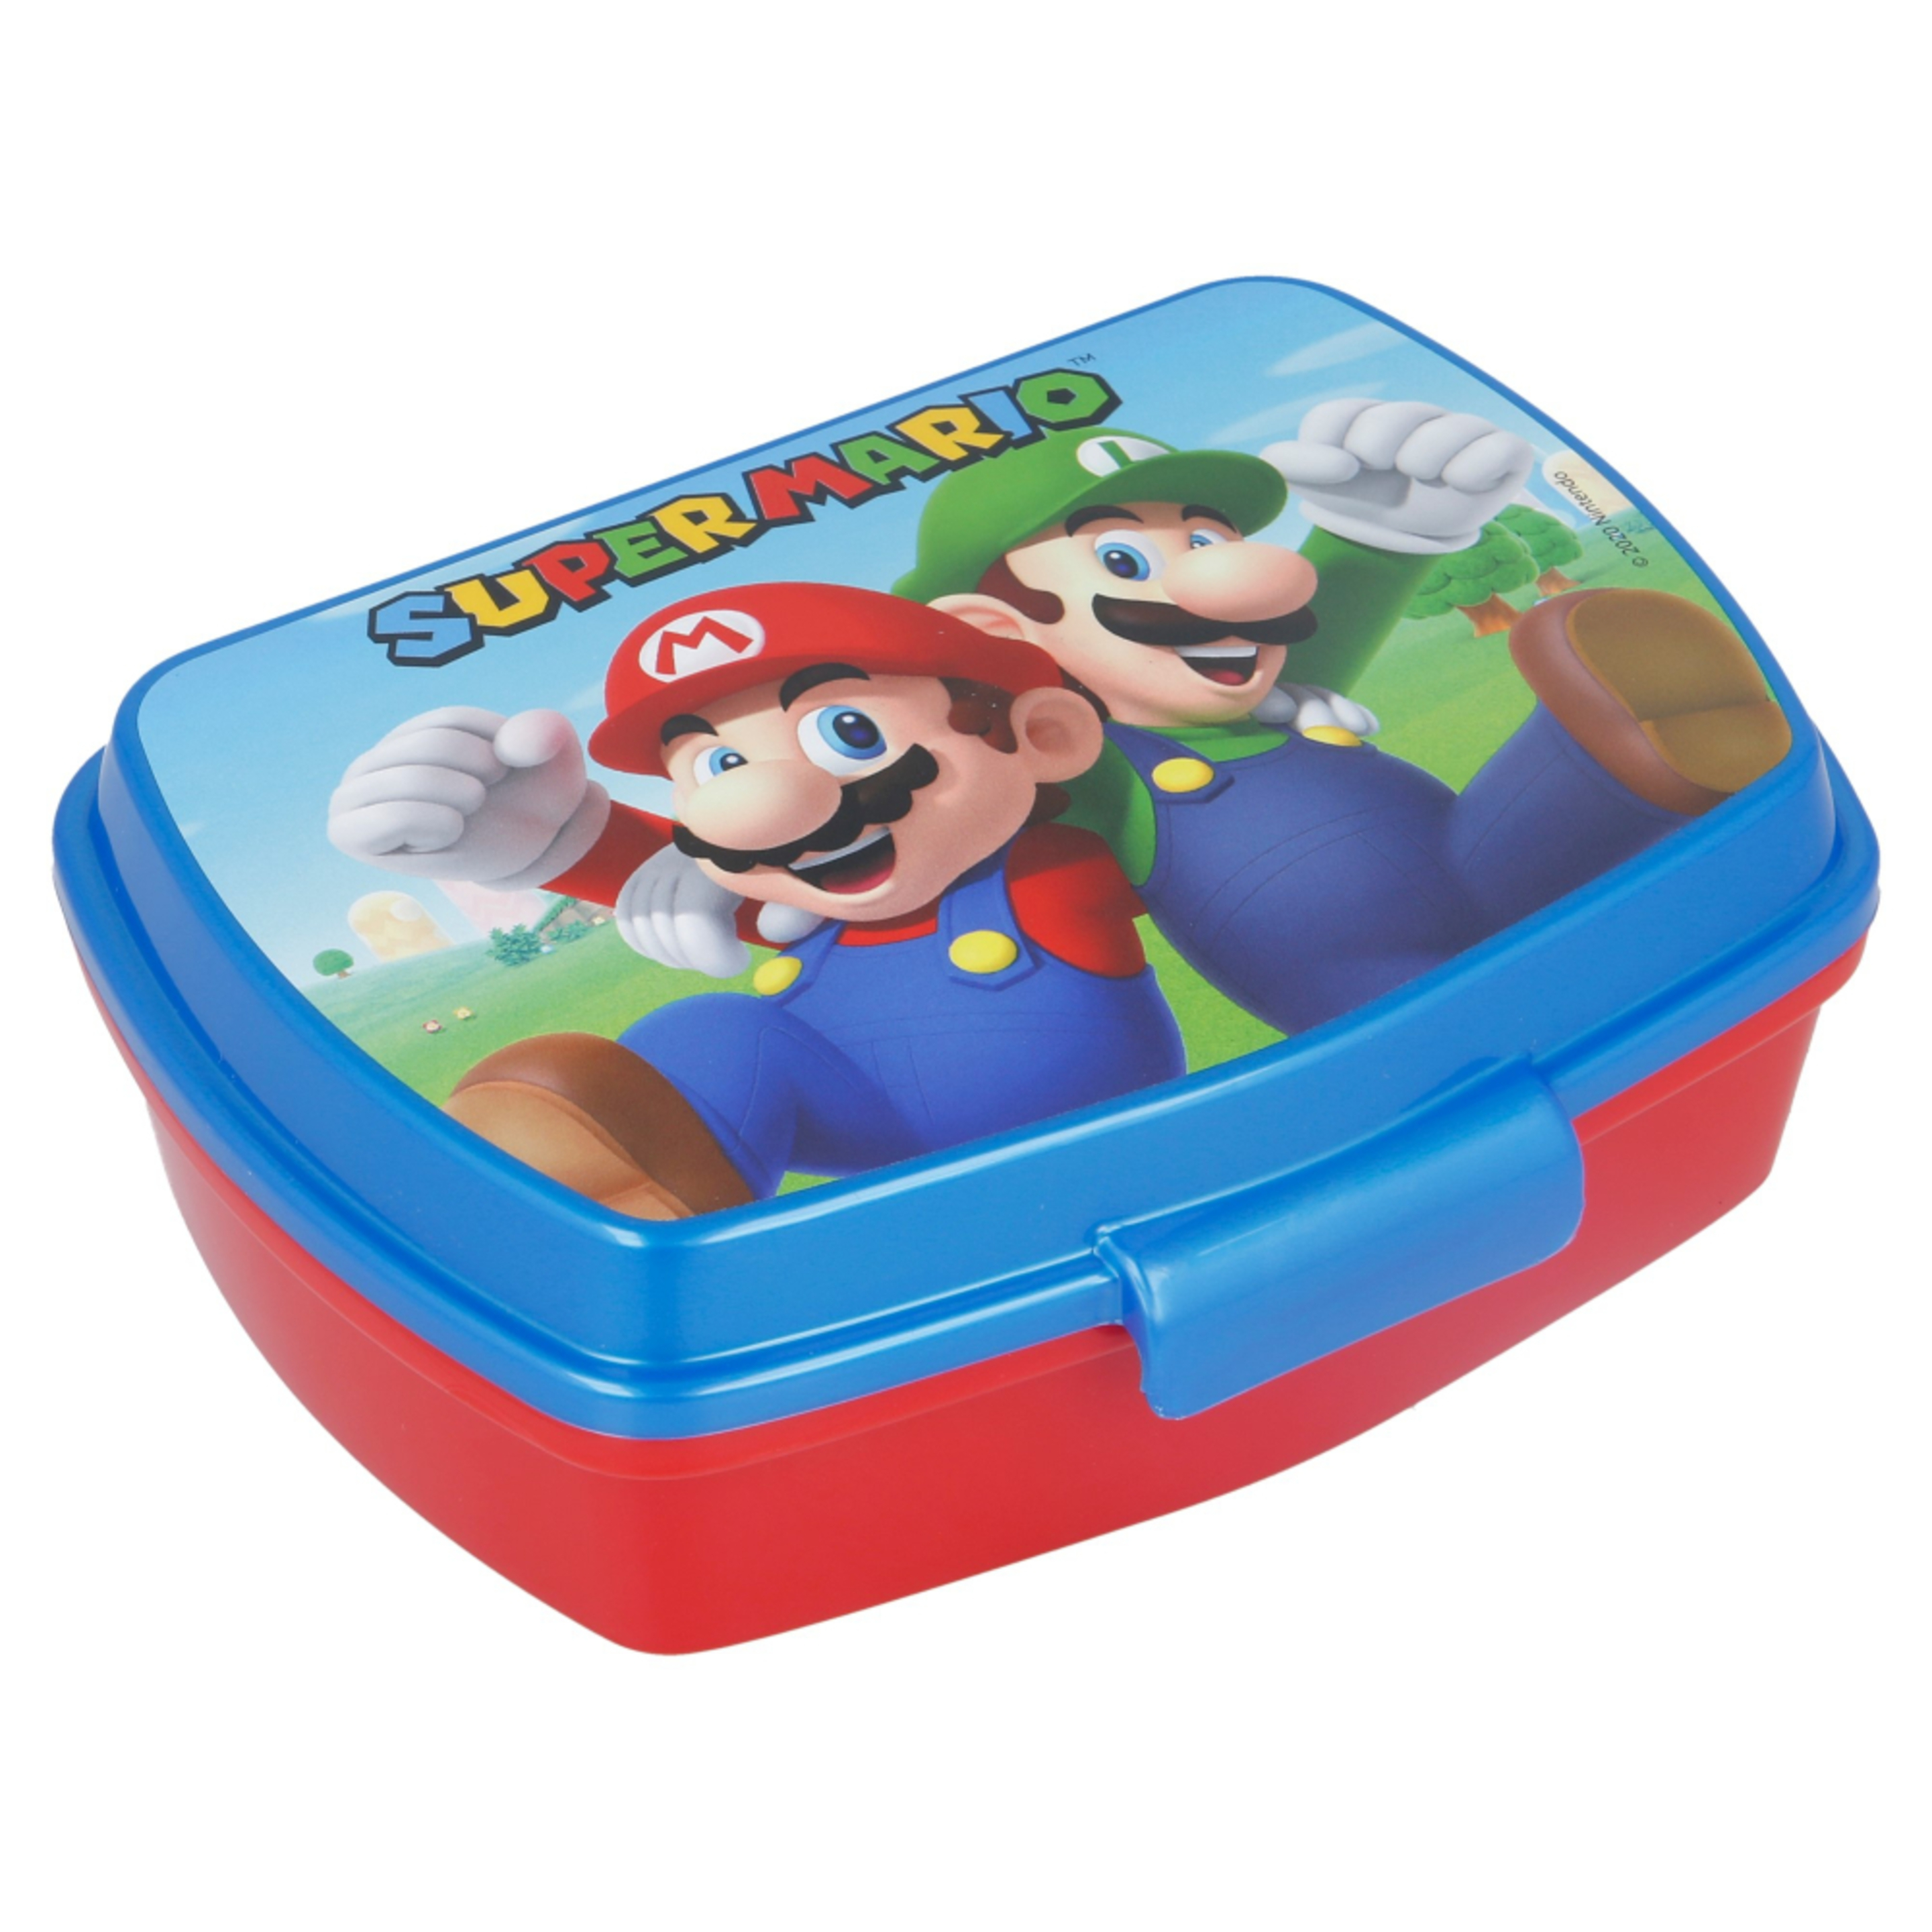 Sandwichera Super Mario Bros 63622 - azul - 